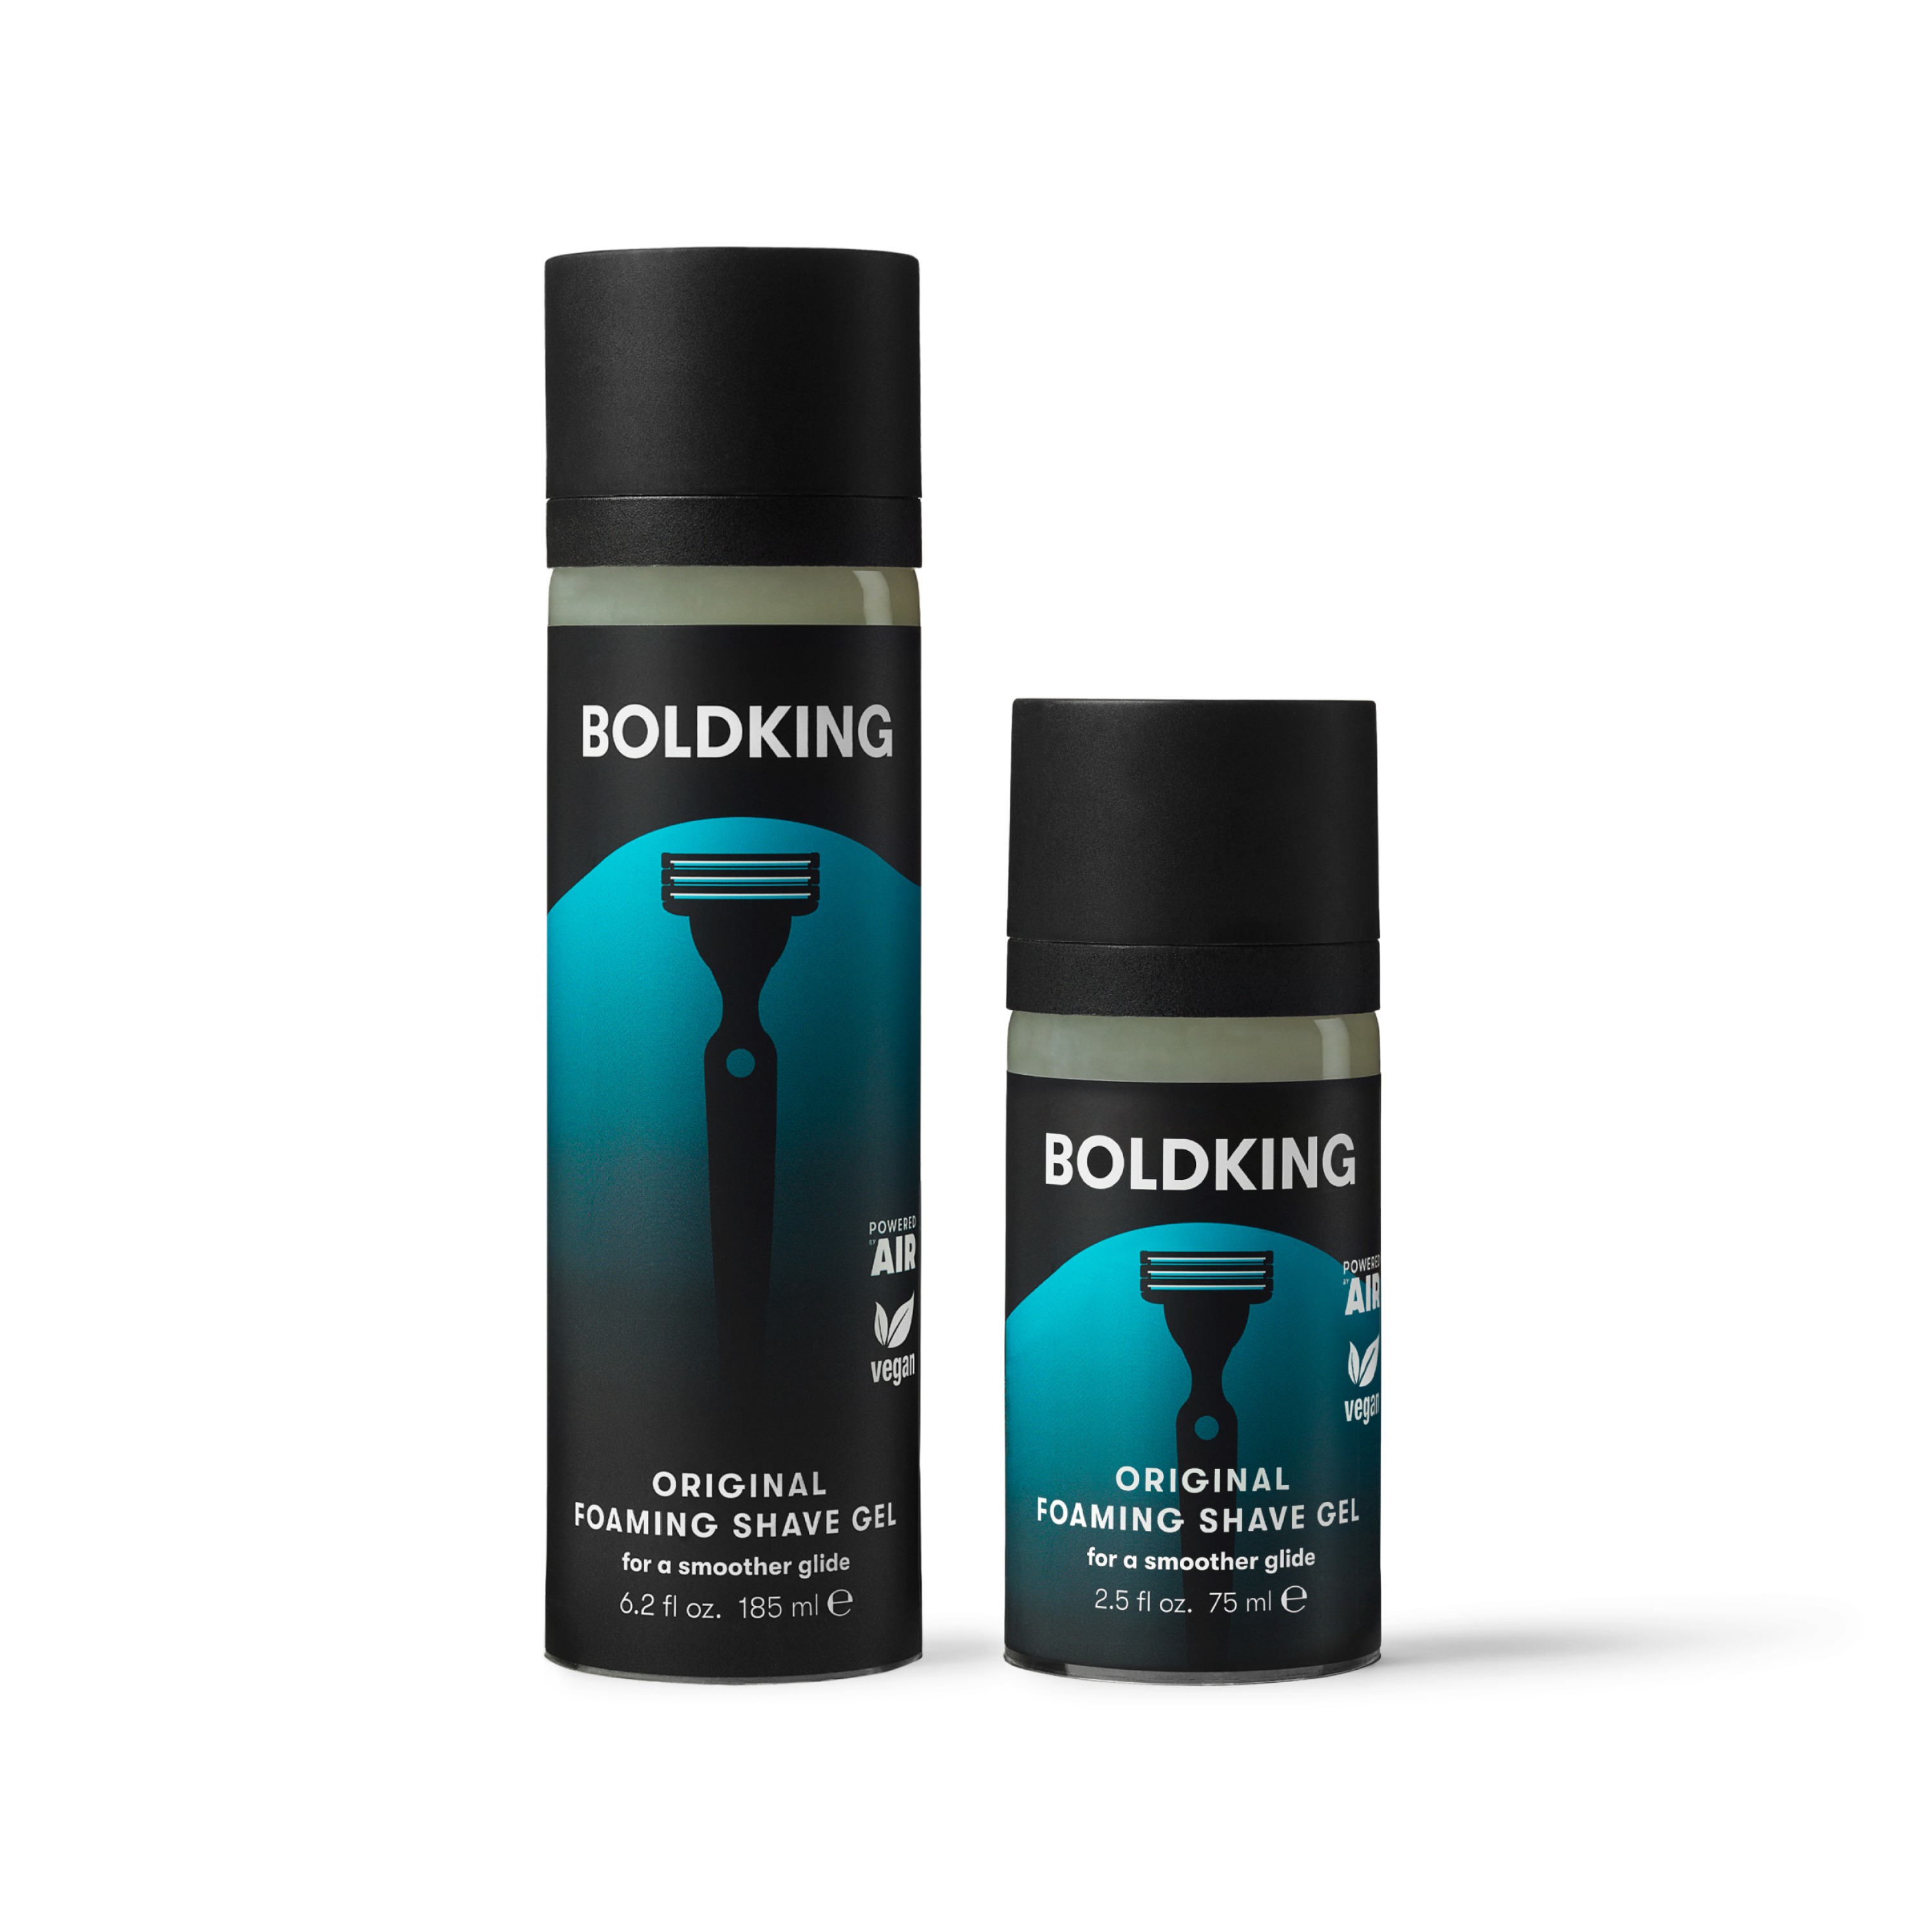 Boldking Foaming Shave Gel 75ml Original